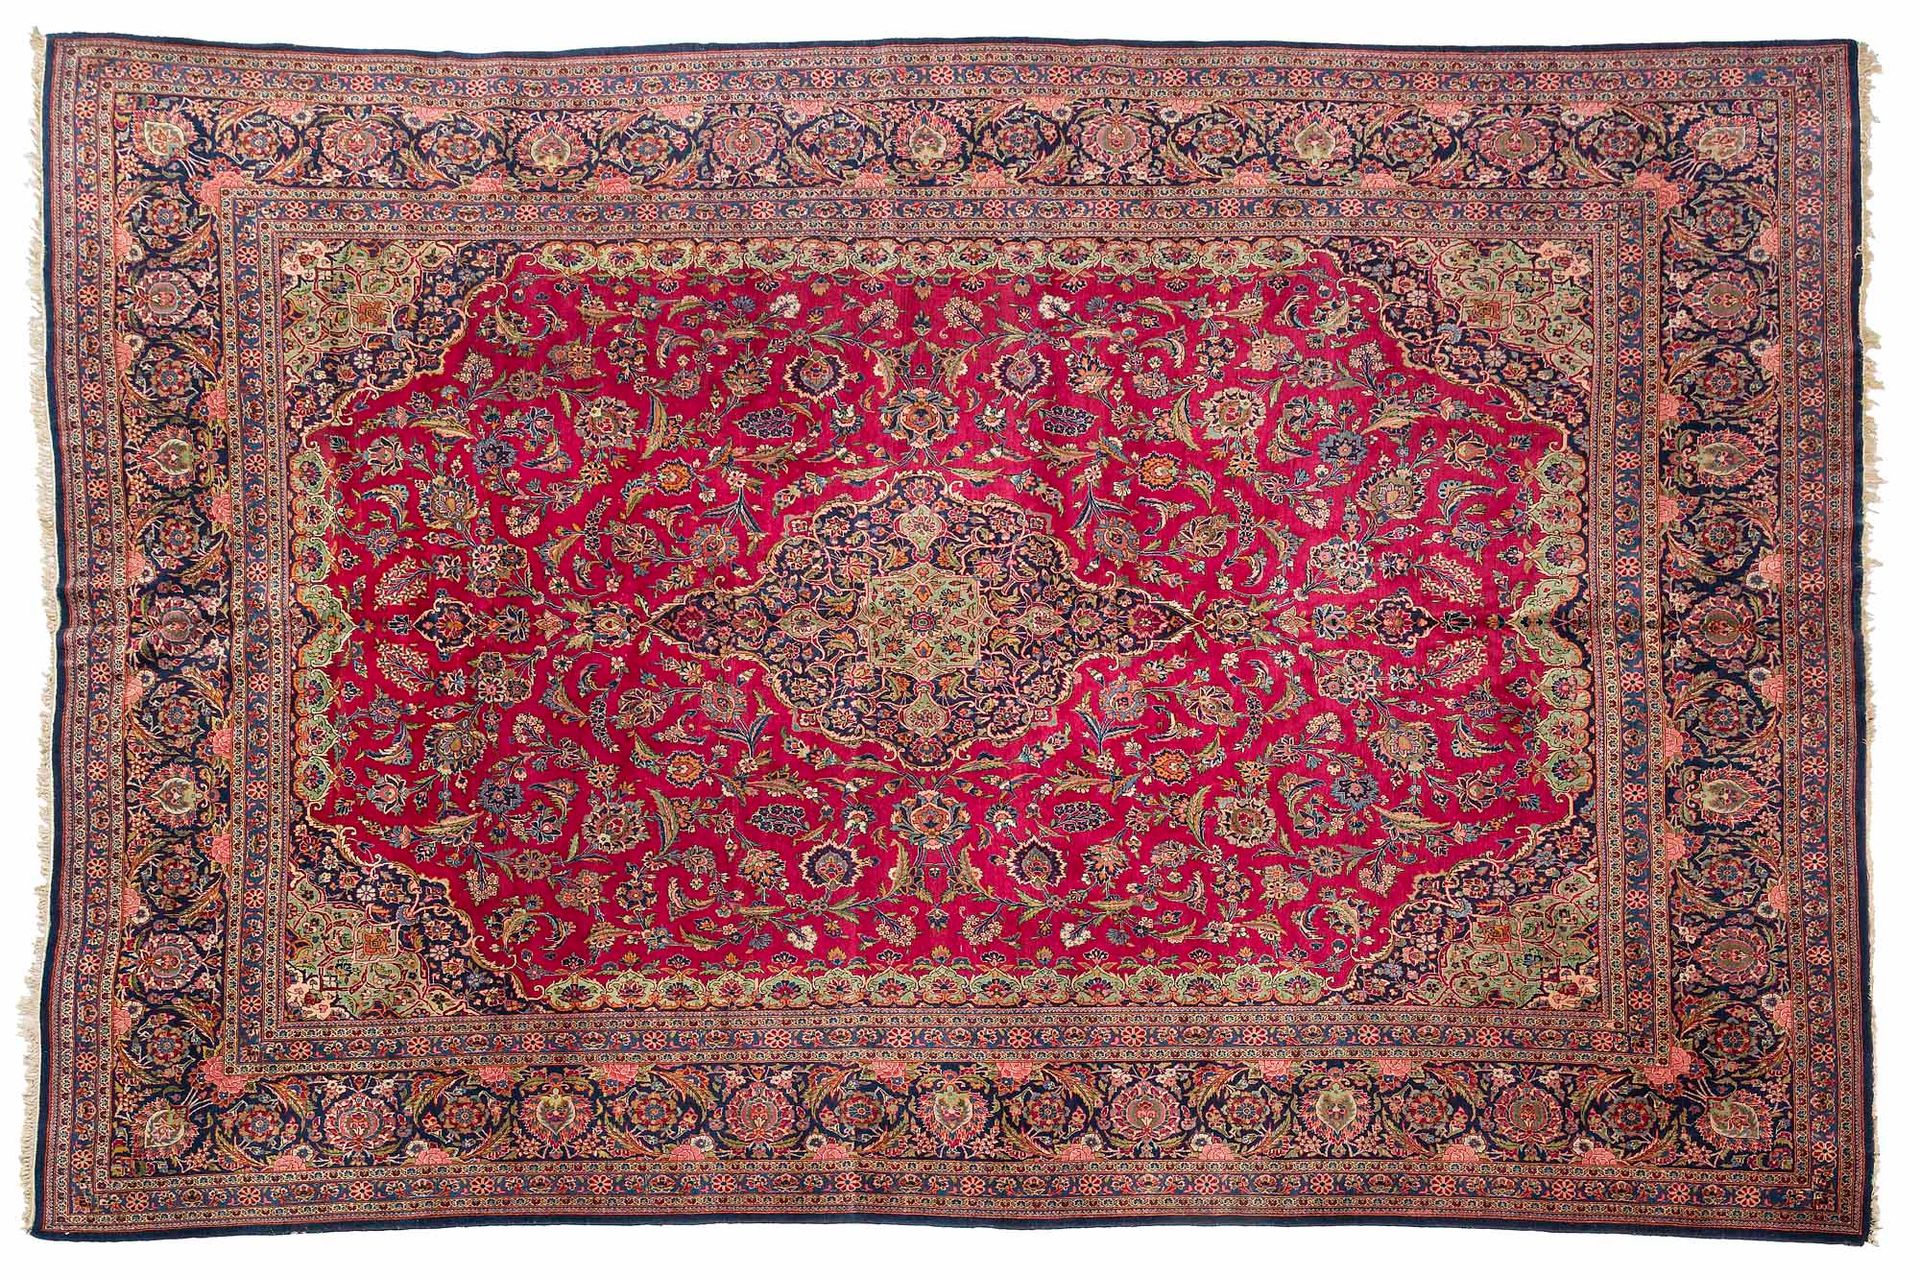 Null KACHAN-Teppich (Iran), um 1930/40.

Maße: 420 x 310 cm.

Technische Merkmal&hellip;